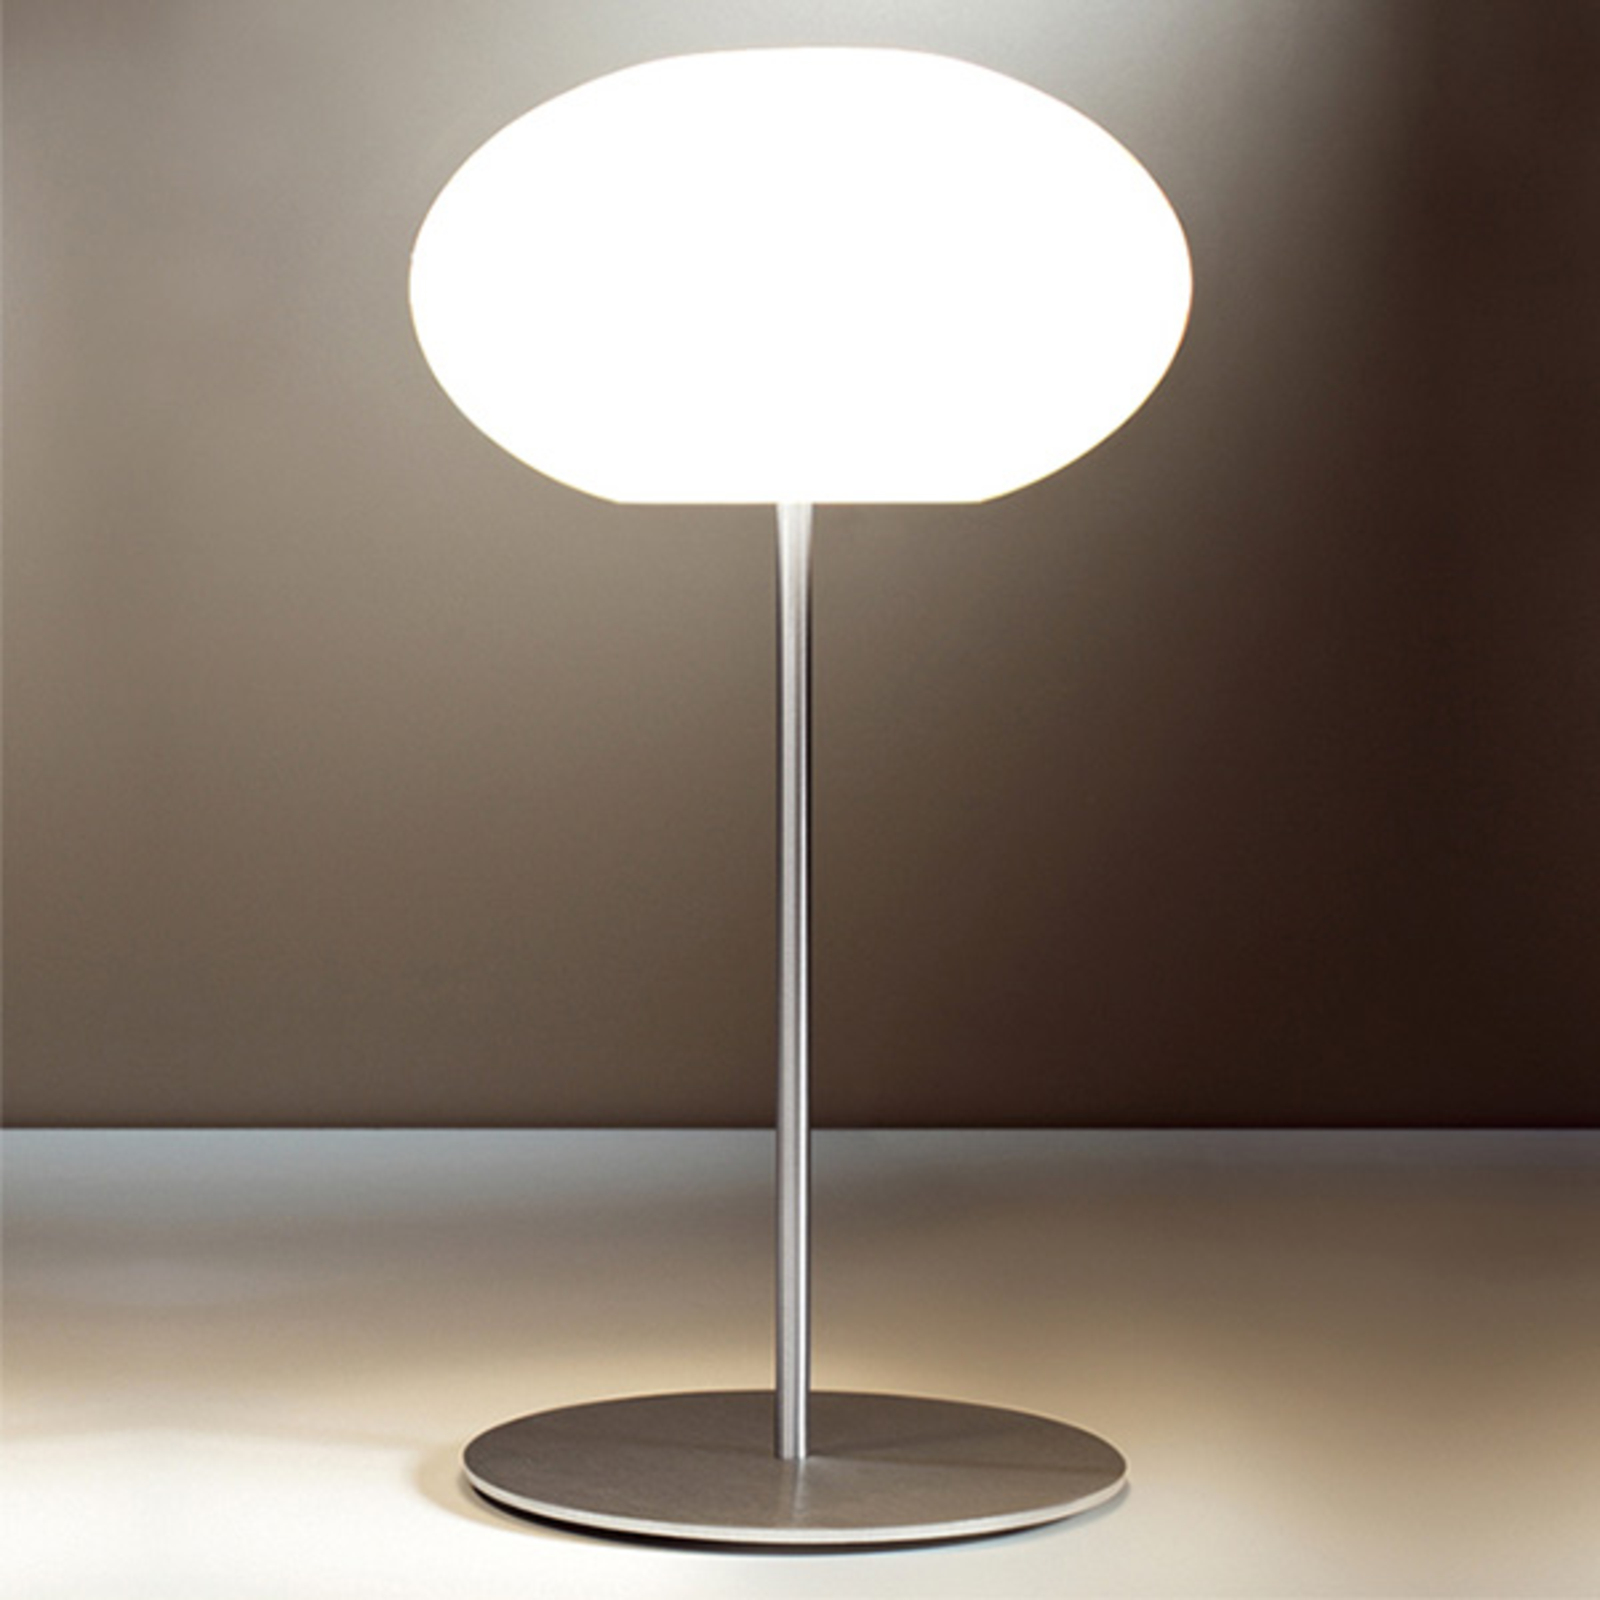 Casablanca Aih lampa stołowa Ø28cm biała lśniąca